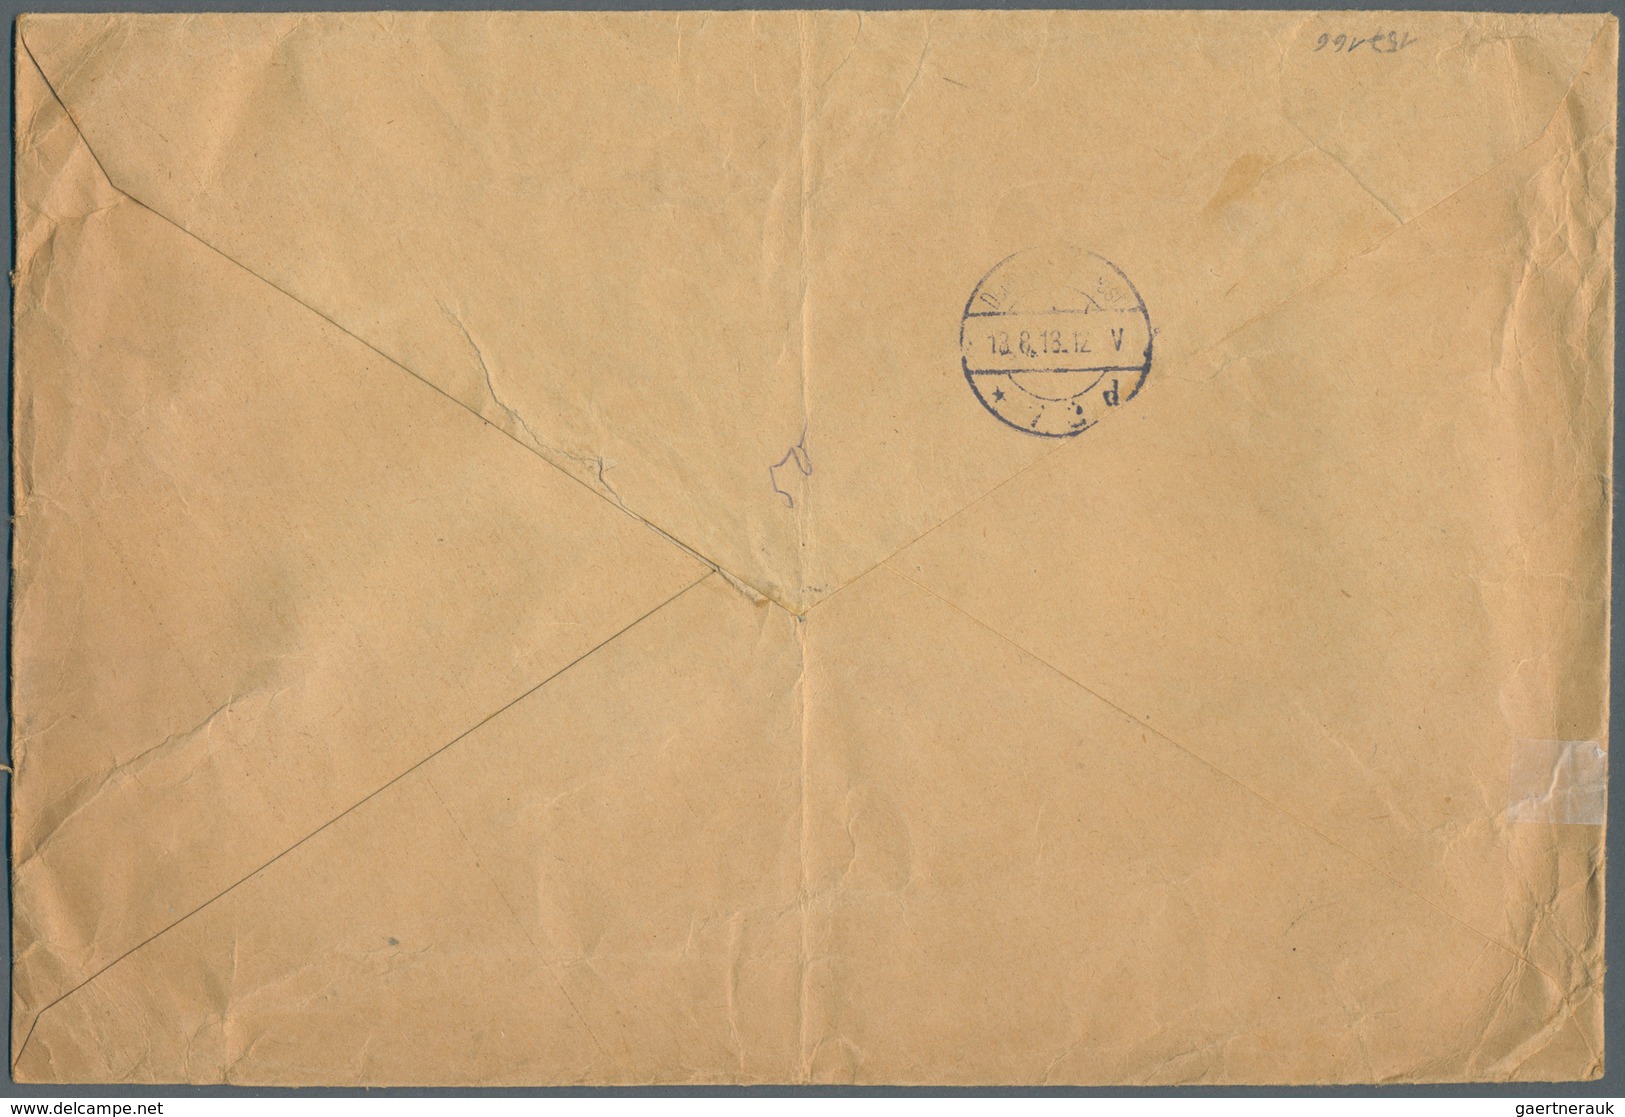 00342 Holyland: 1918, Large Registered Cover From Haifa With Fieldpost Mark "Deutsche Feldpost 365 31.7.18 - Palestina